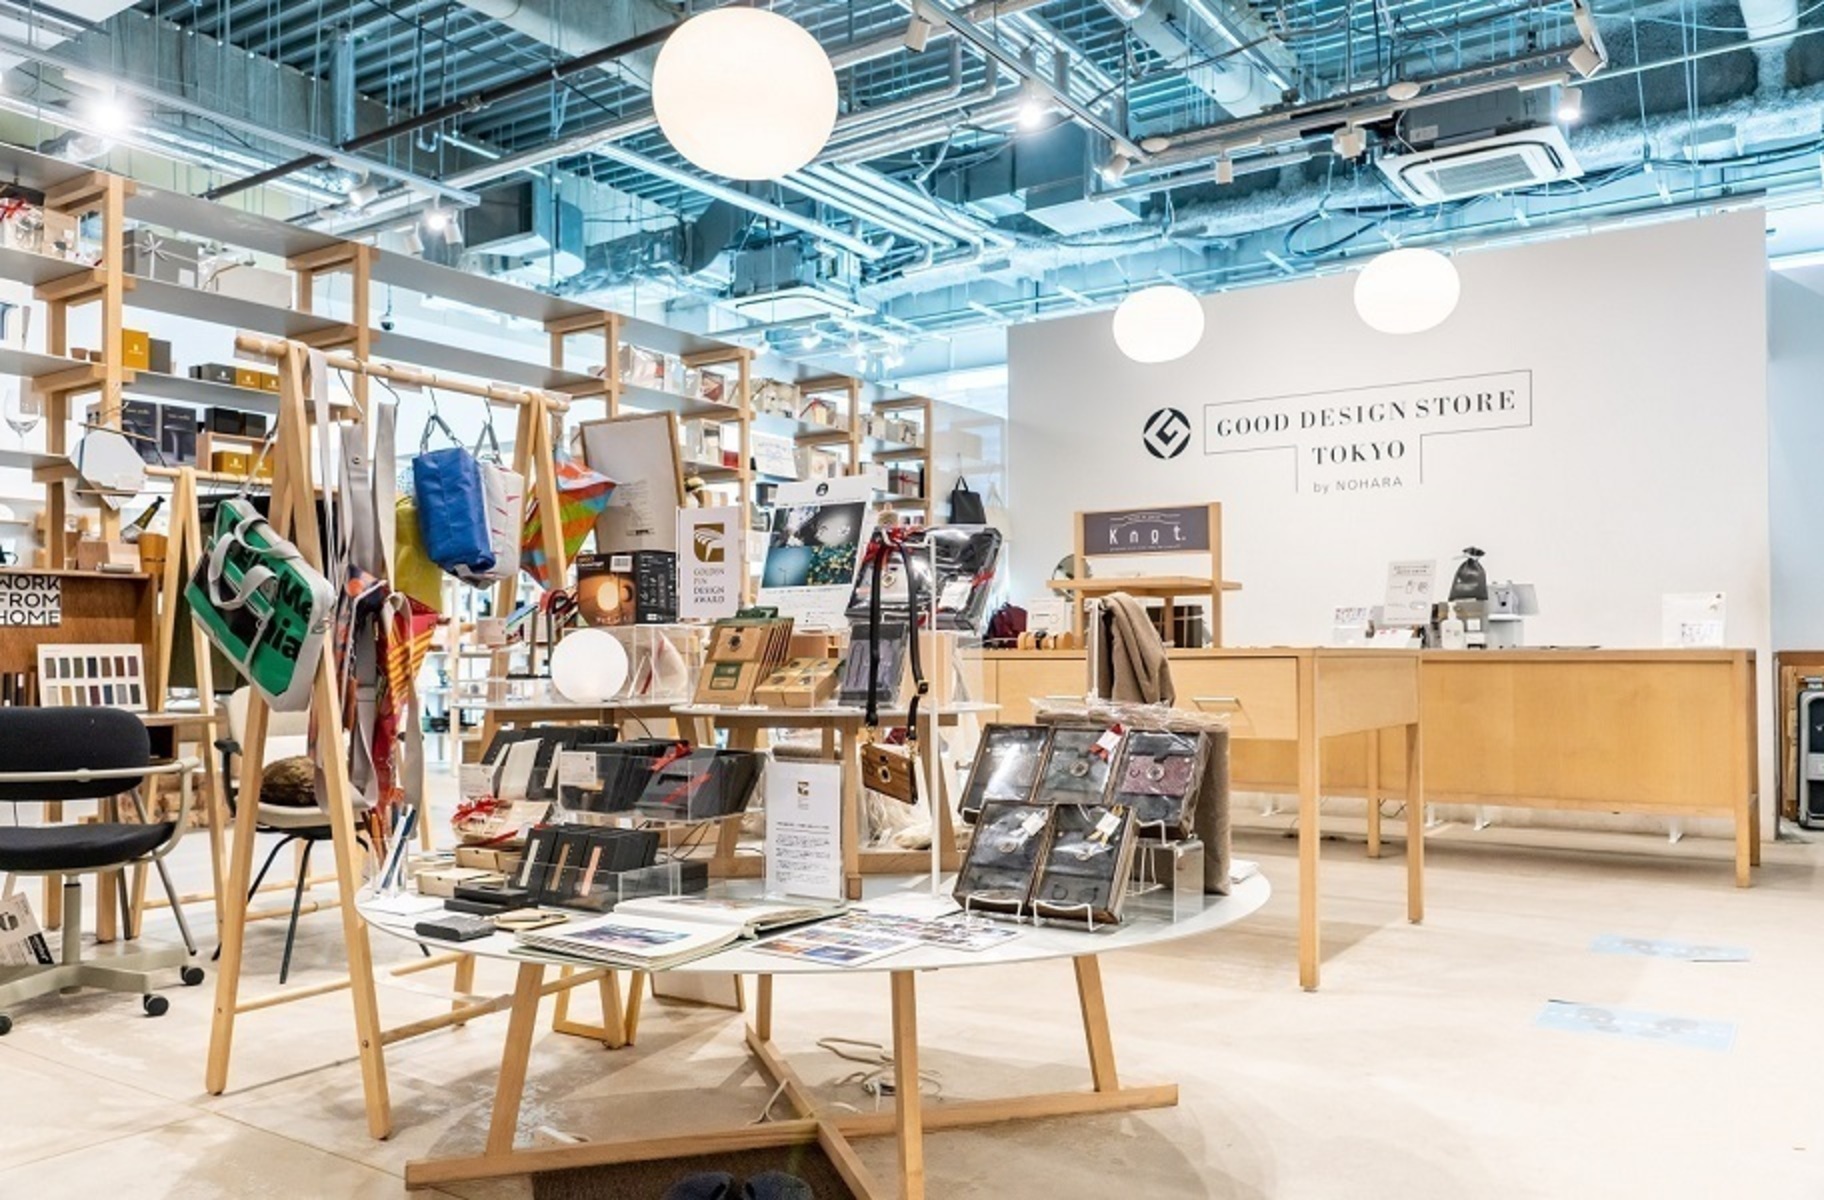 Golden Pin Design Award Sets Up Shop in Good Design Award’s Tokyo Marunouchi Store! Permanent Display Exhibits and Sells Award-winning Designs